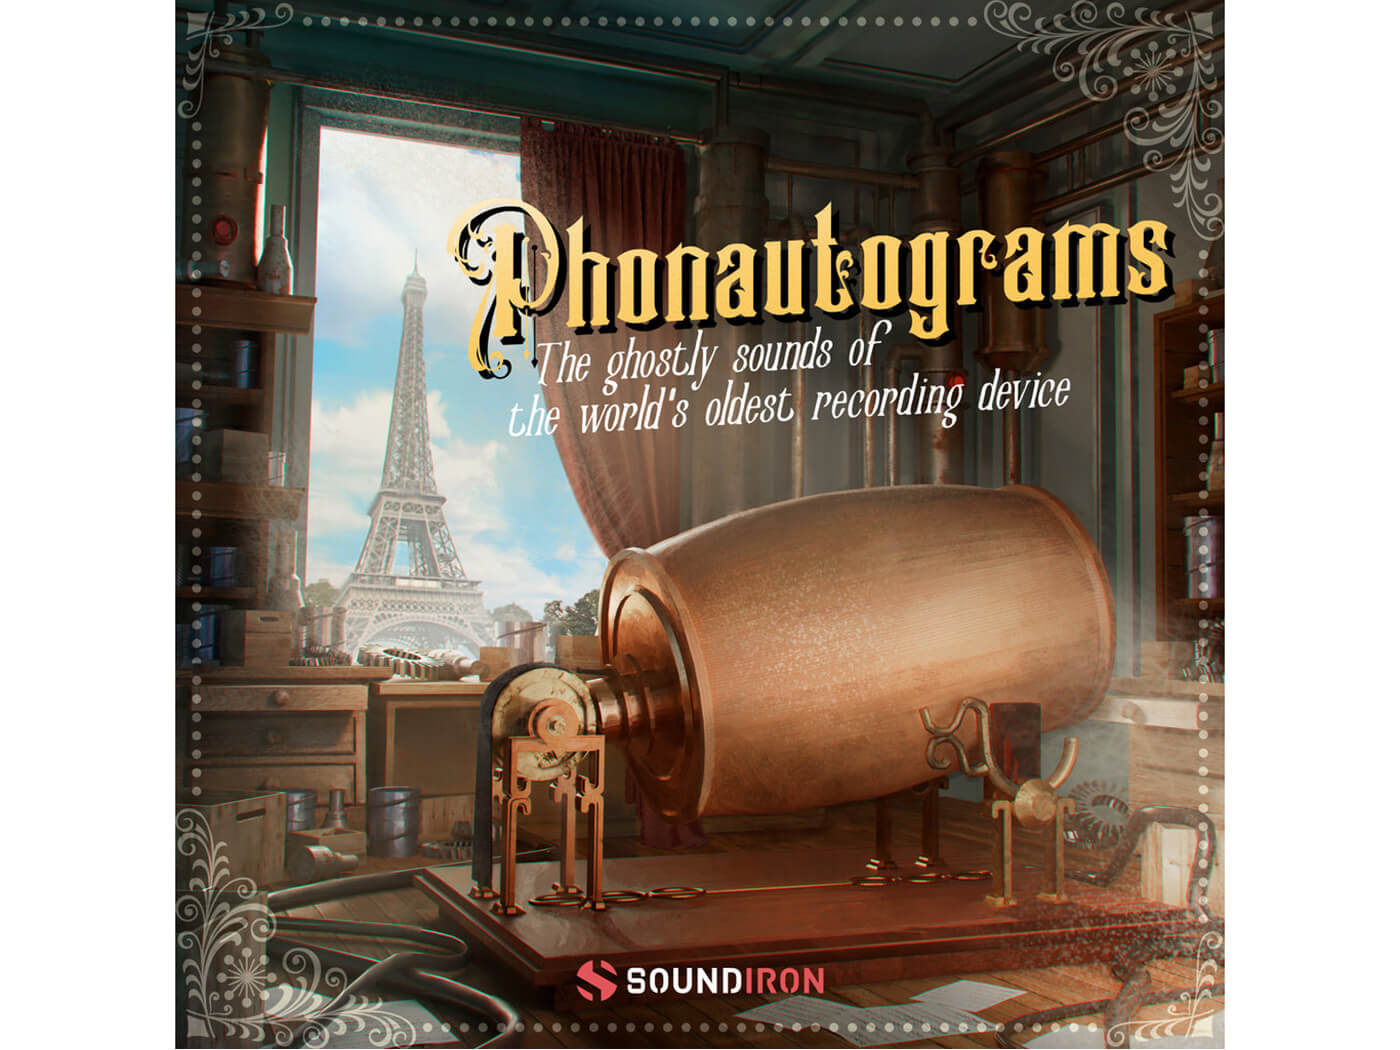 Soundiron - Phonautograms